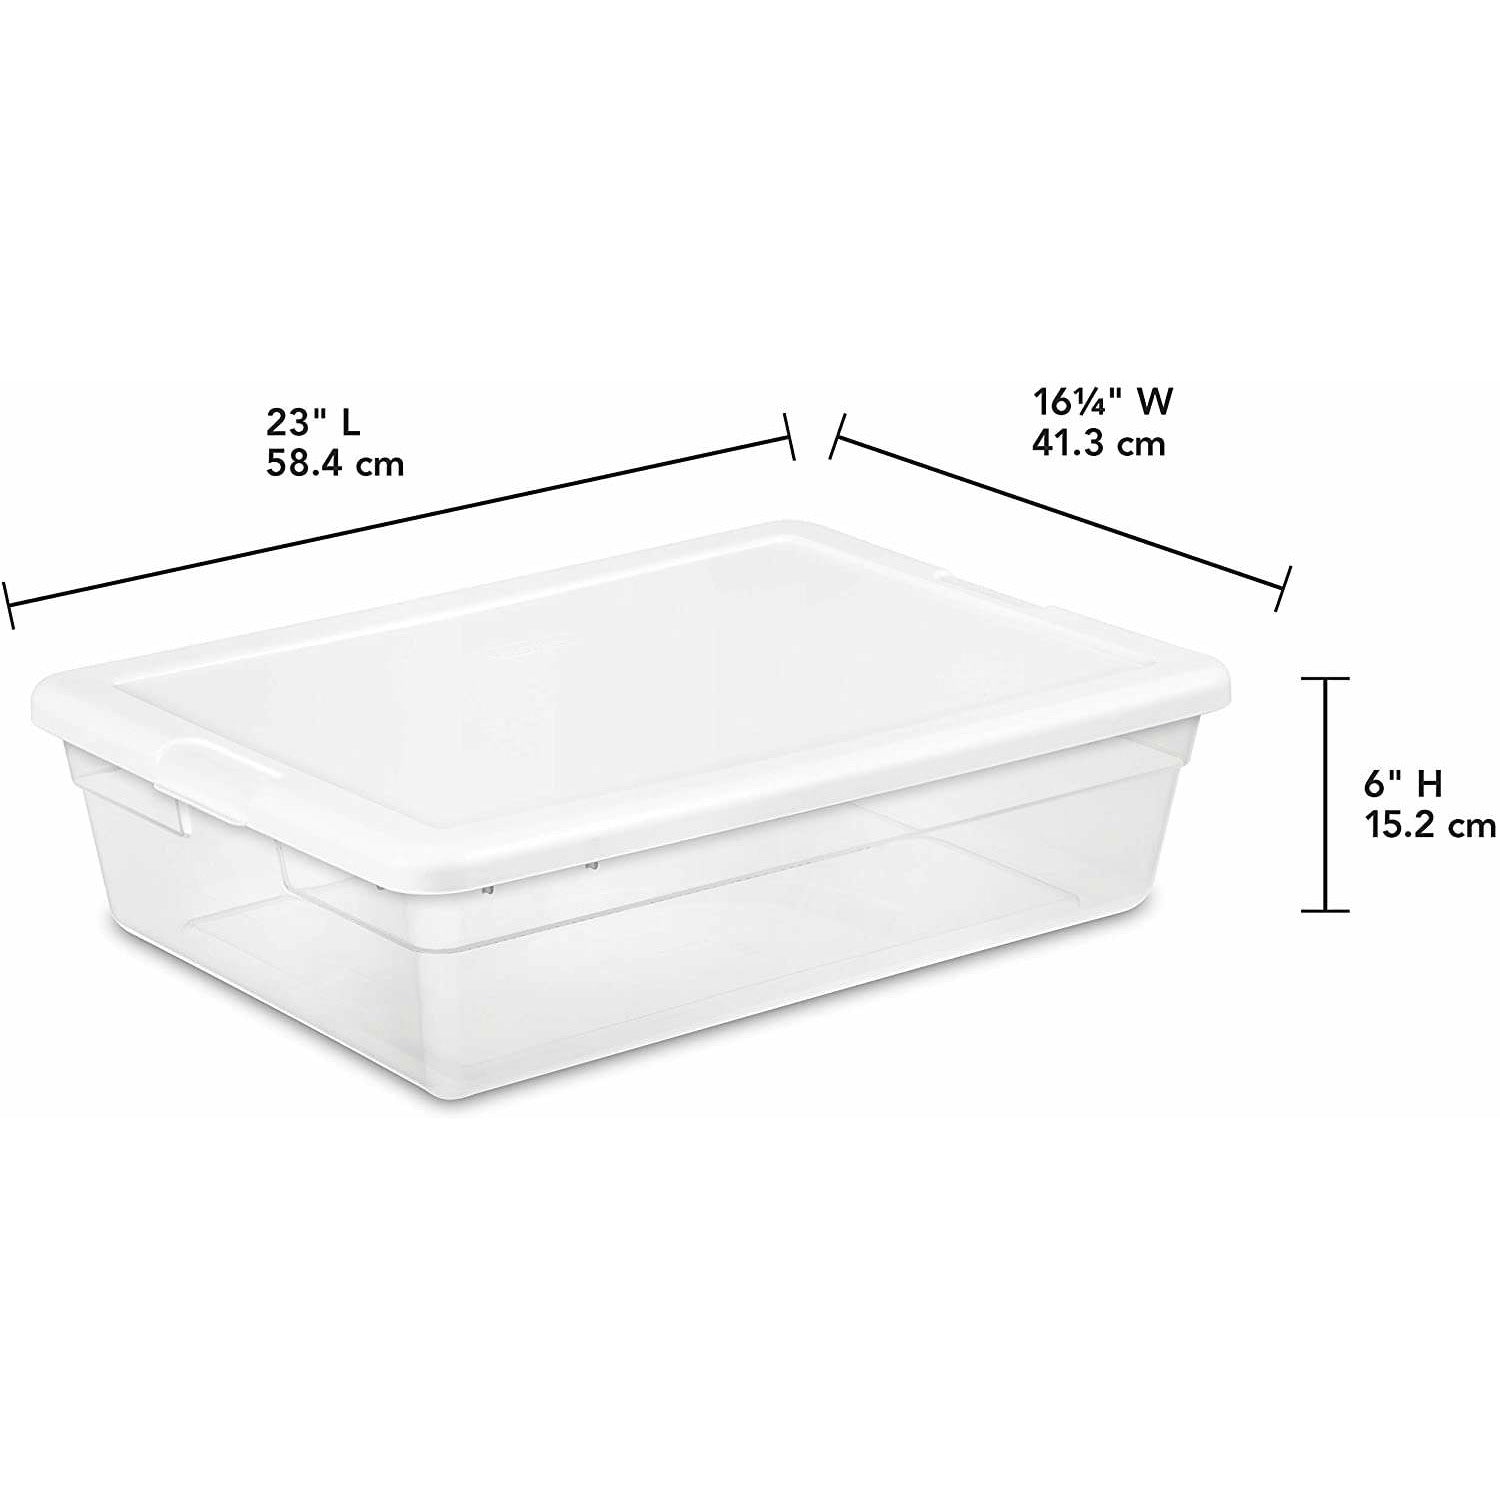 Sterilite 27 Quart Clear & White Plastic Storage Bin with One